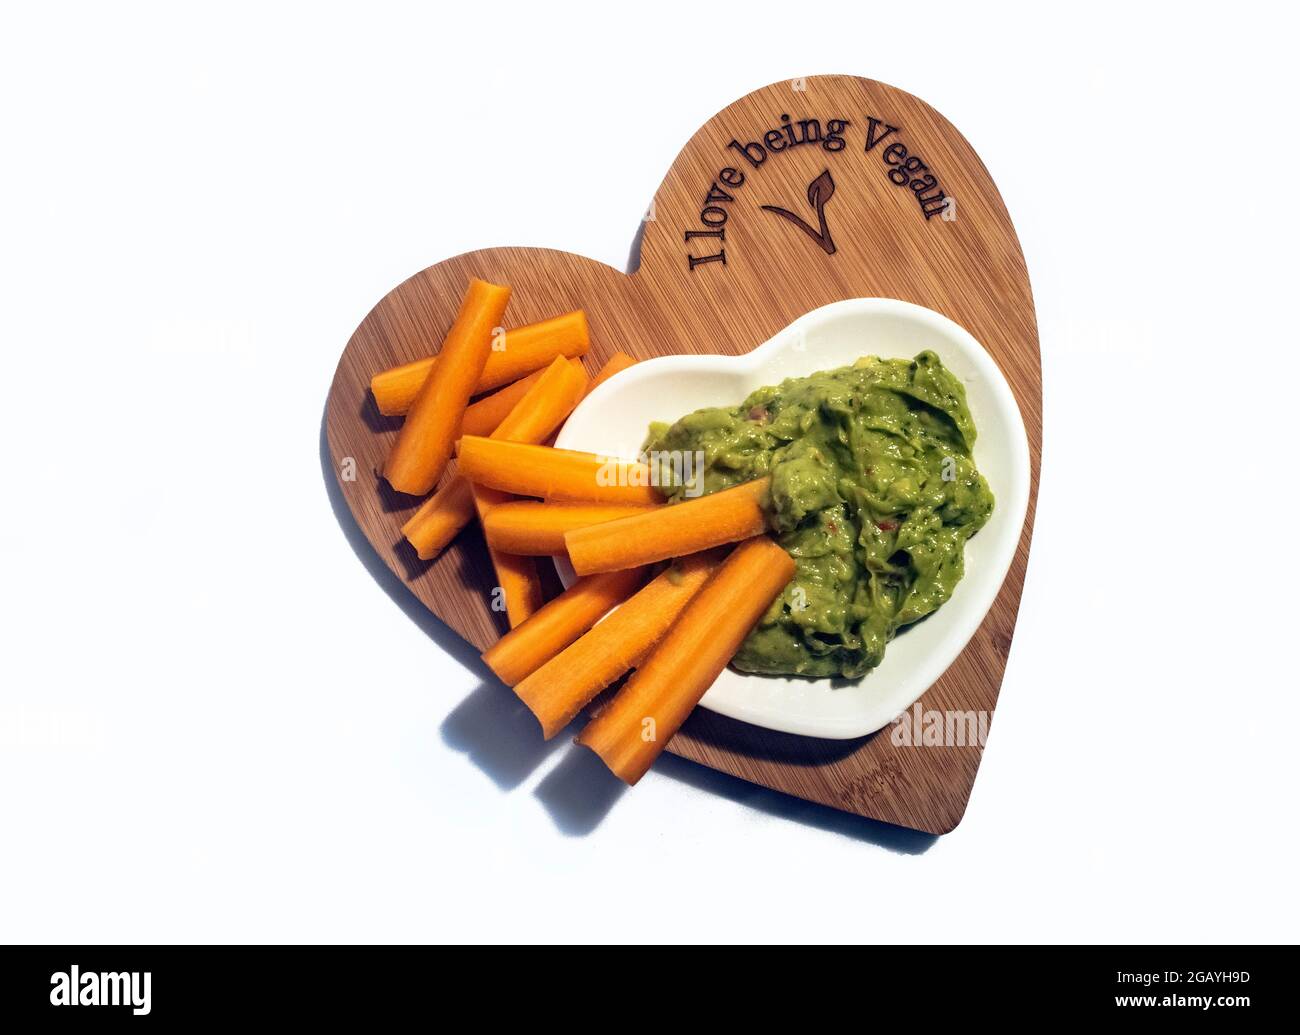 Healthy Vegan Snacking Food - Vegan Quacamole and carrot batons on an 'I Love Being Vegan' Heart-shaped chopping board. Stock Photo